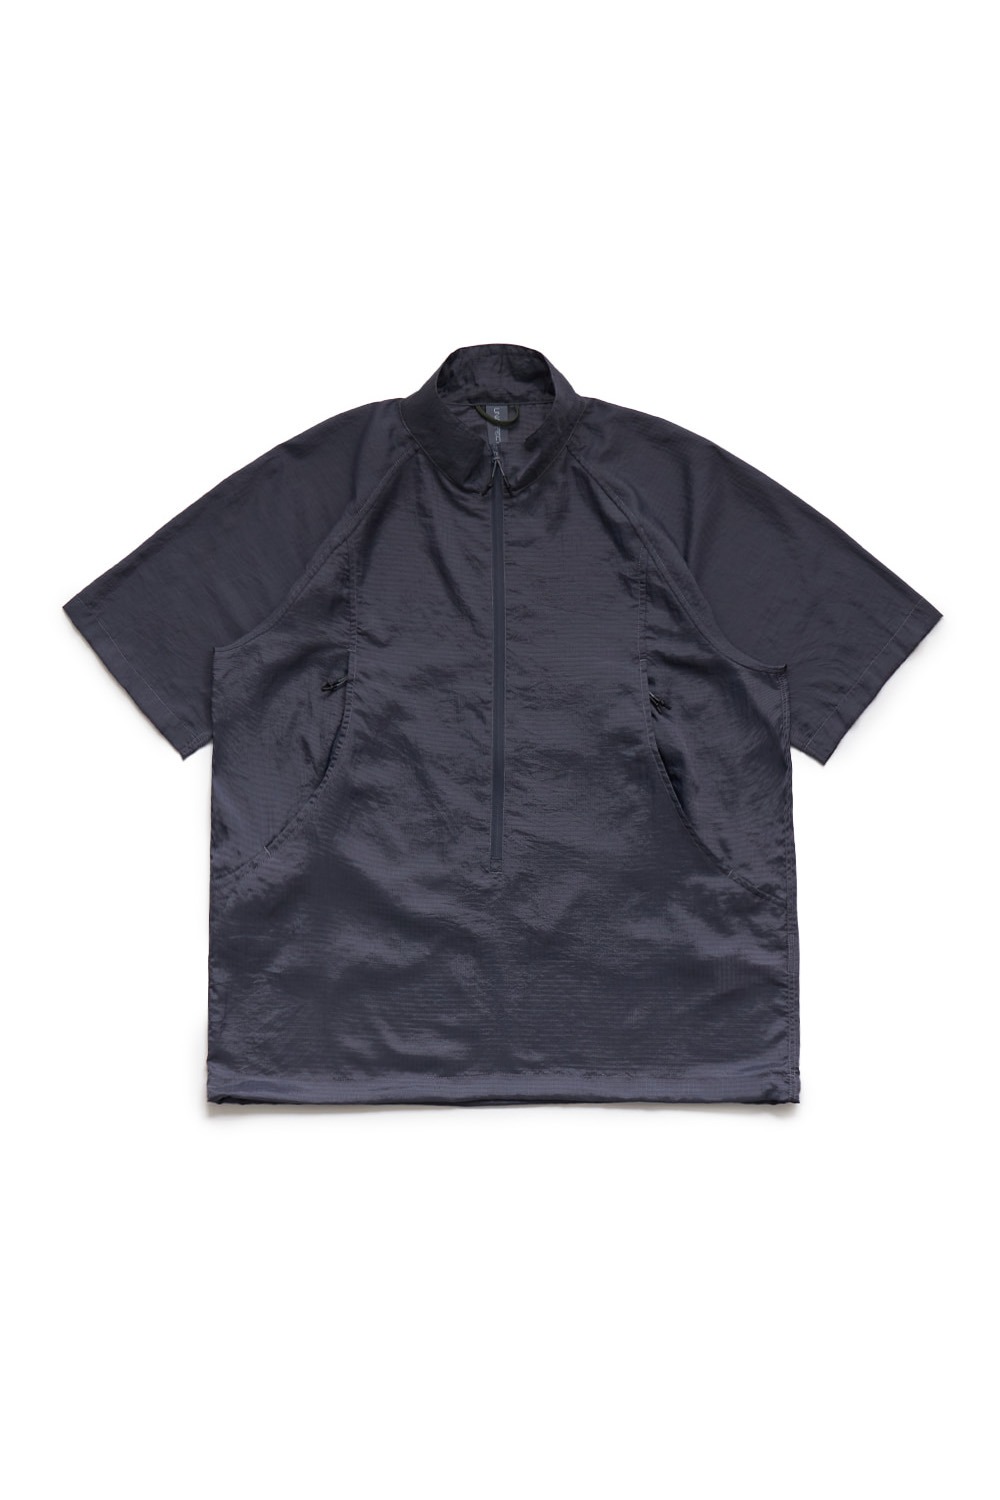 Standcollar Pullover Half Shirt_Charcoal Grey